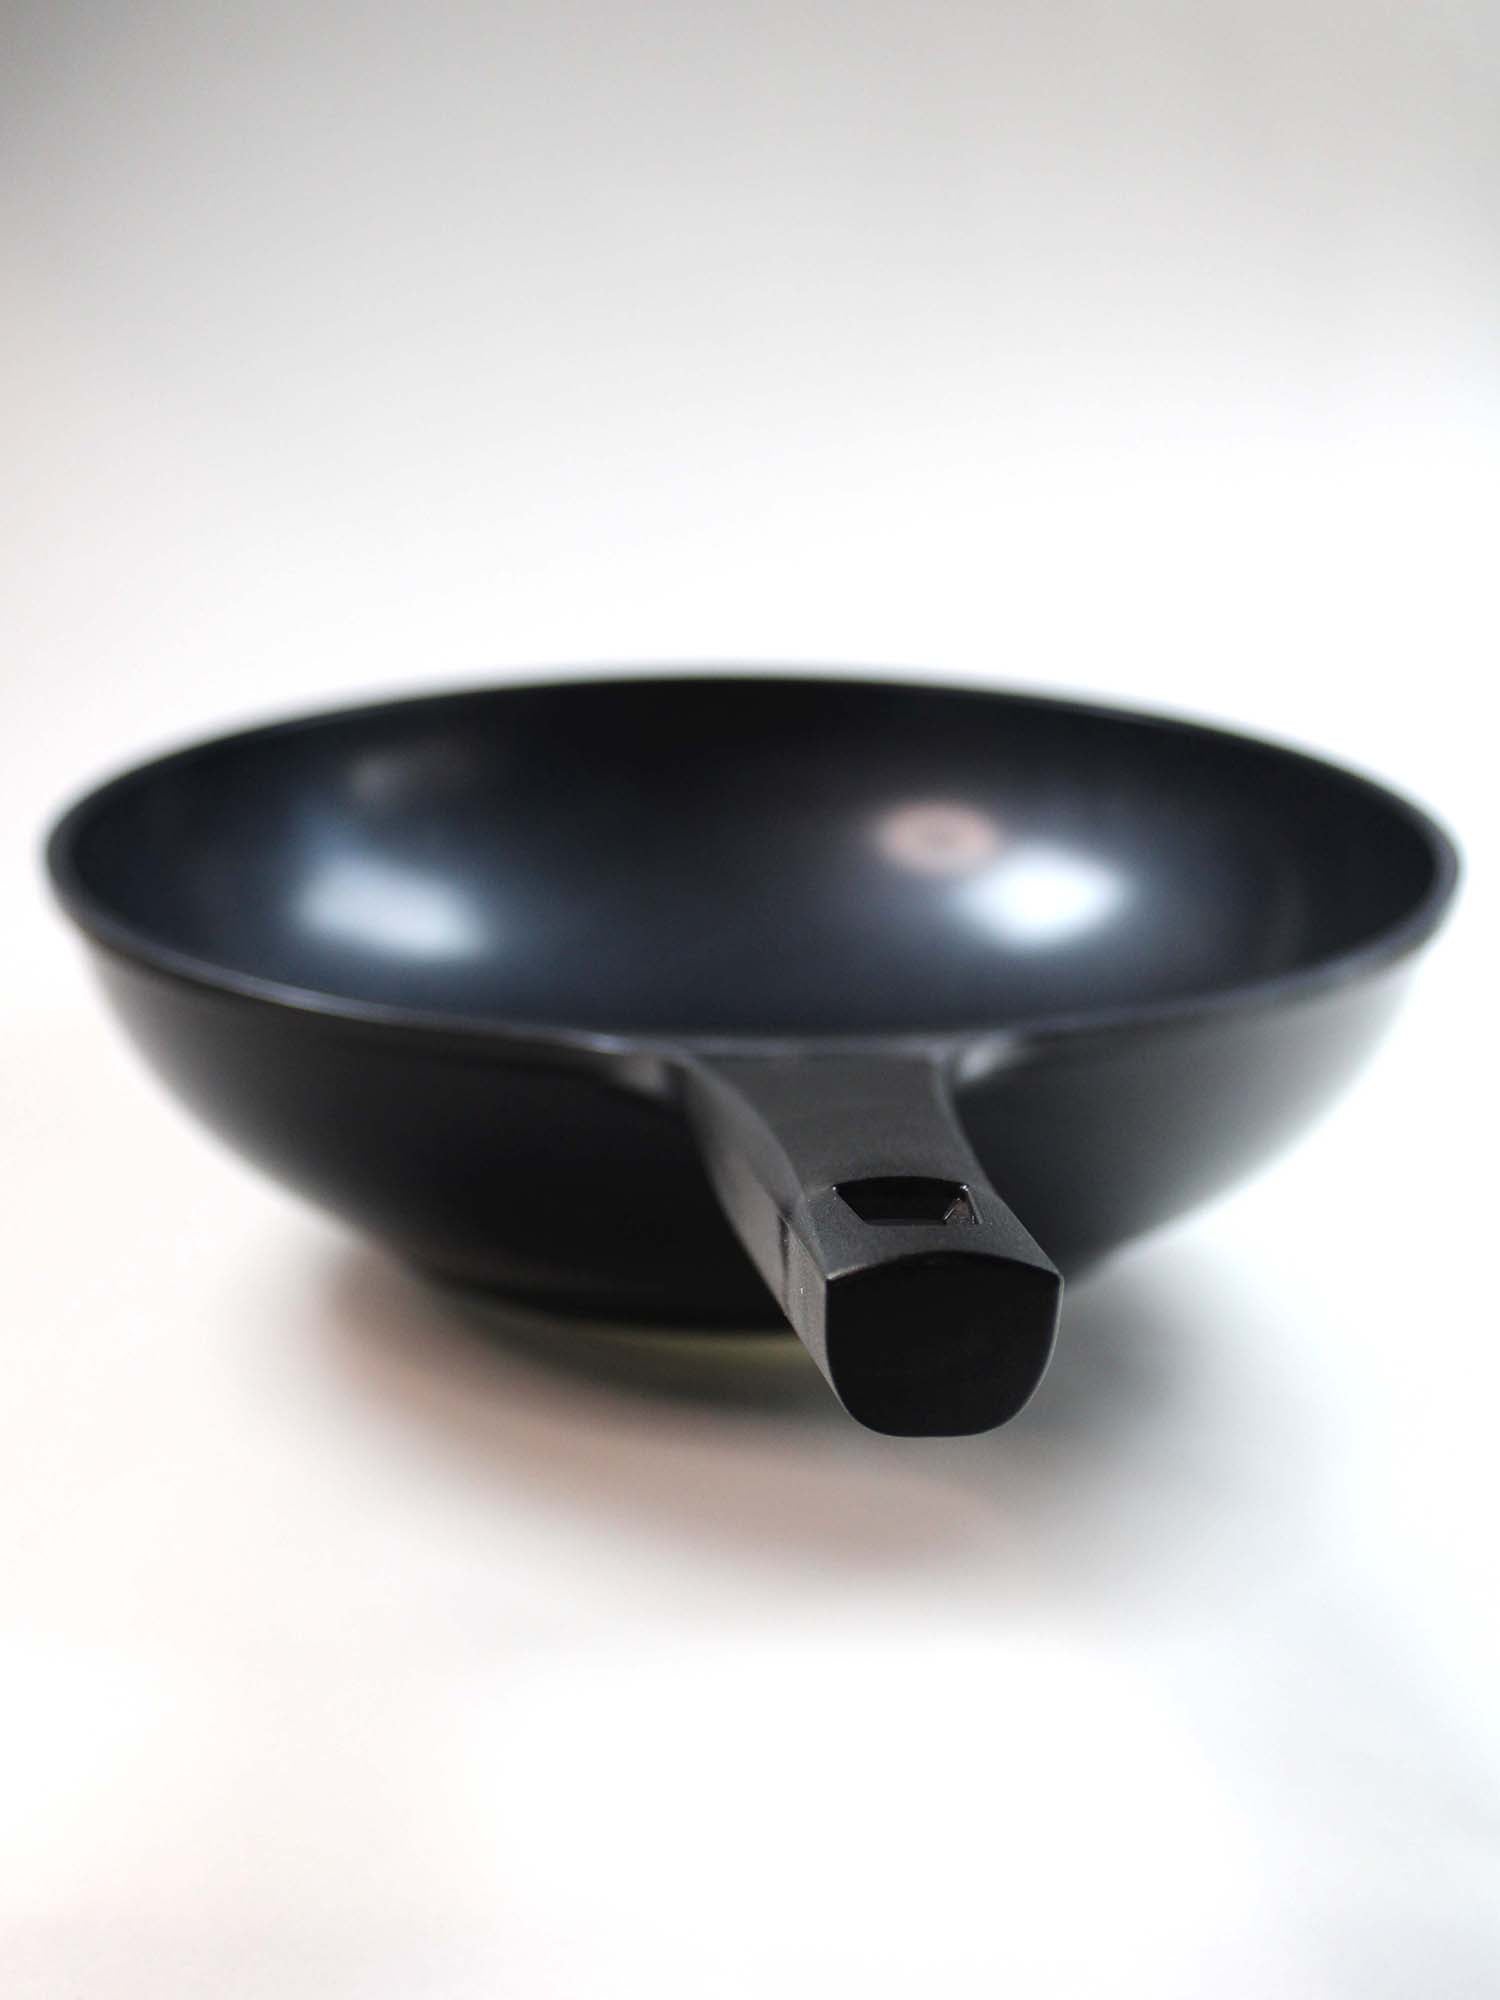 Evaco/Cast Non-Stick Ceramic Stir-Fry Pan, 12"